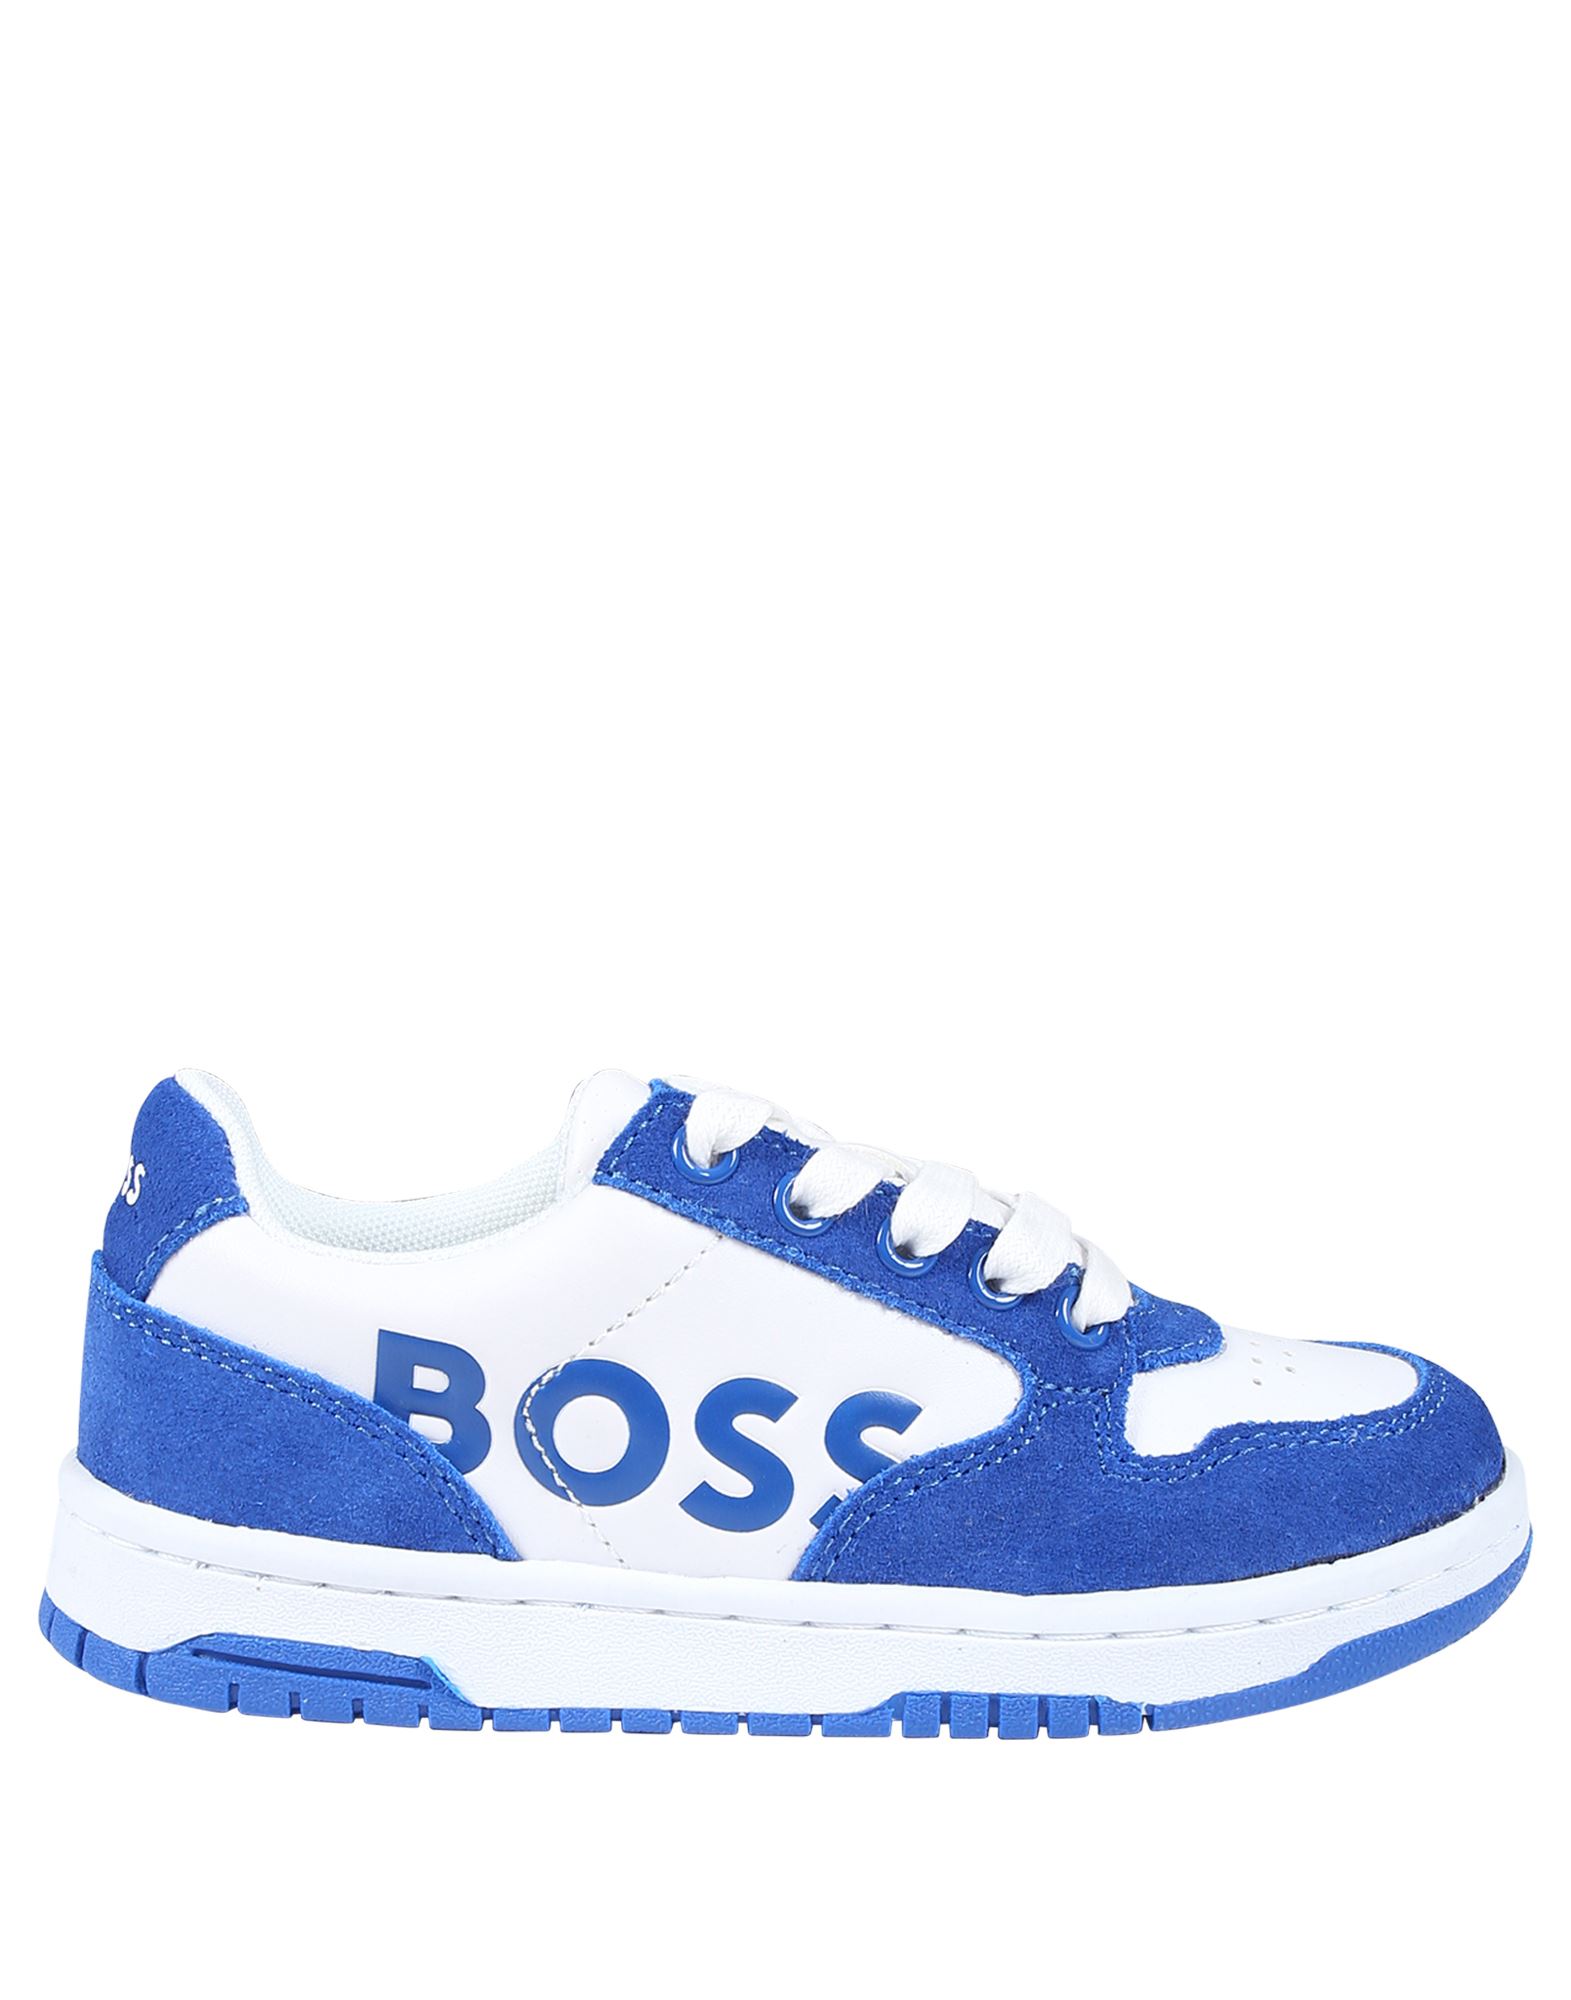 BOSS Sneakers Kinder Azurblau von BOSS